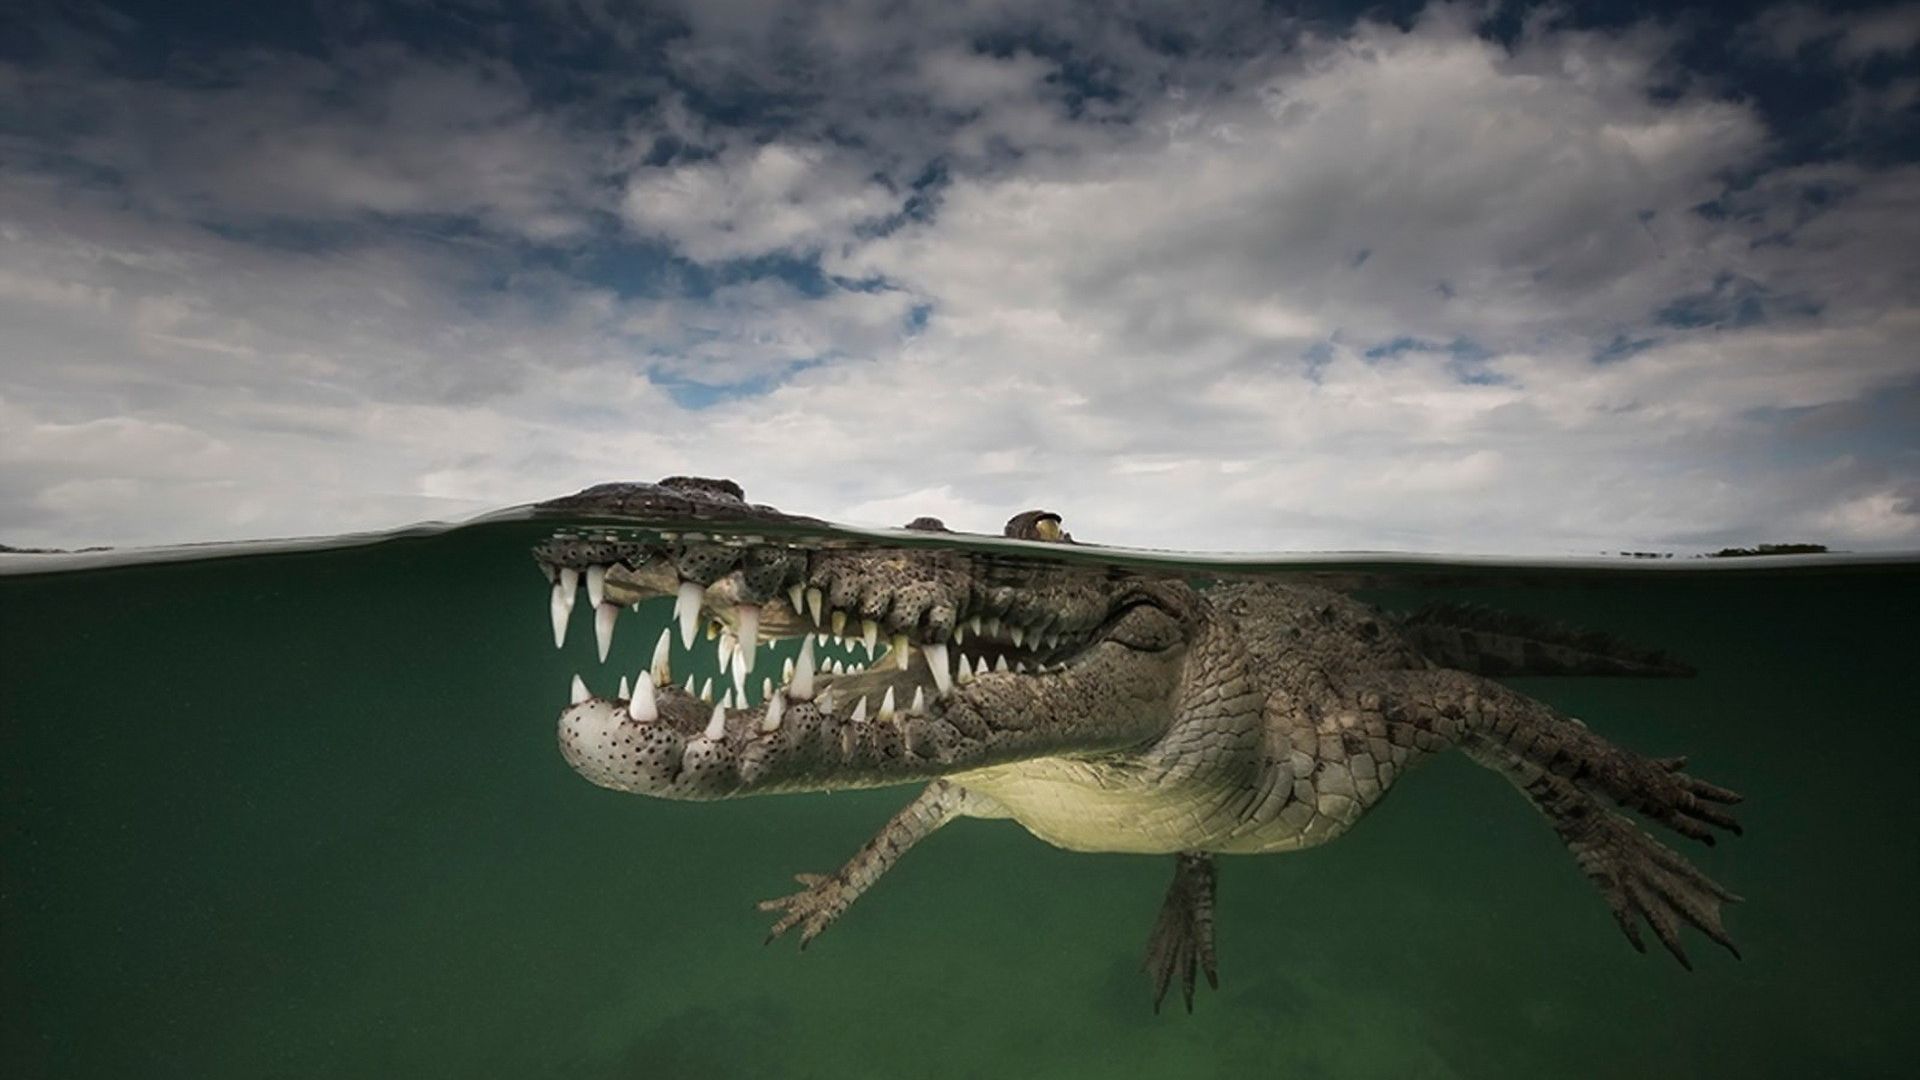 Wallpaper Crocodiles under water close up